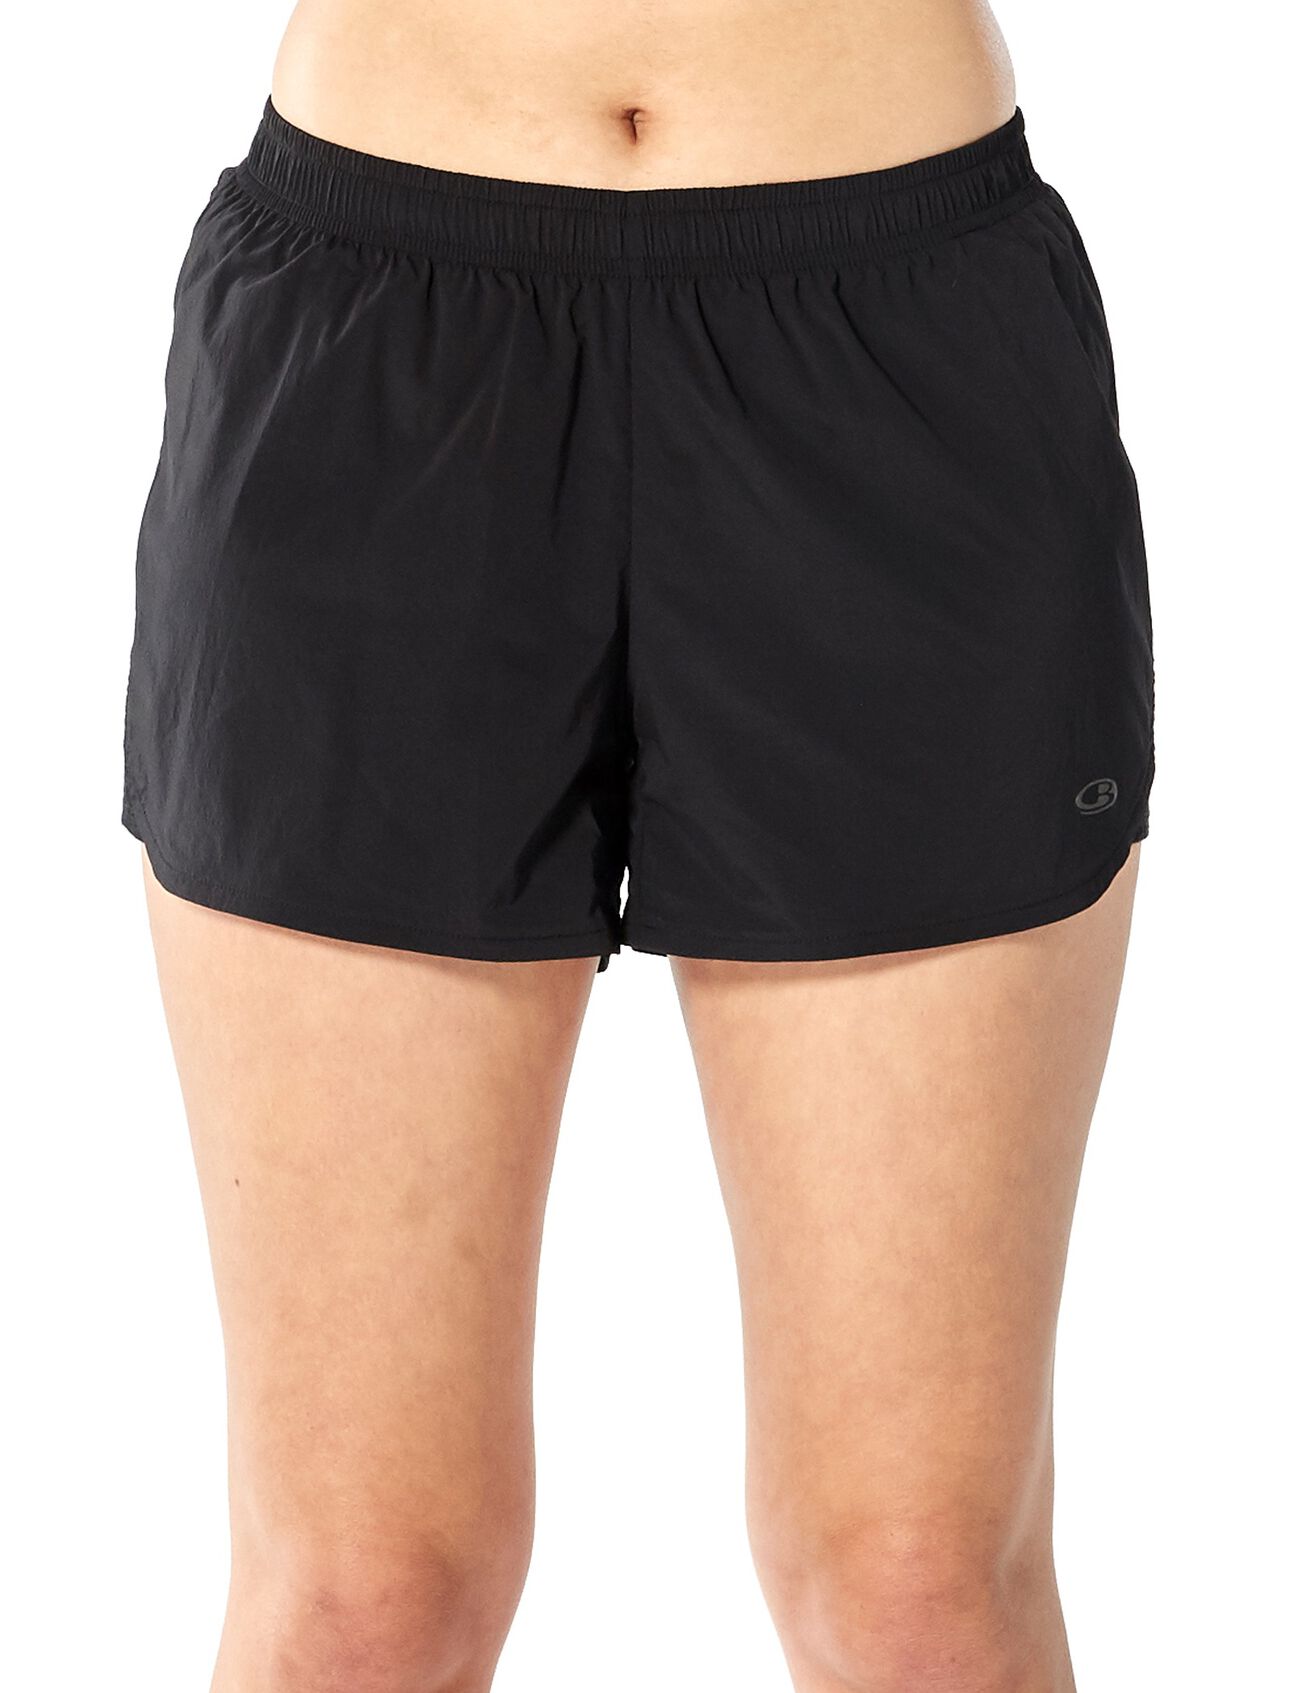 Cool-Lite™ Impulse Running Shorts